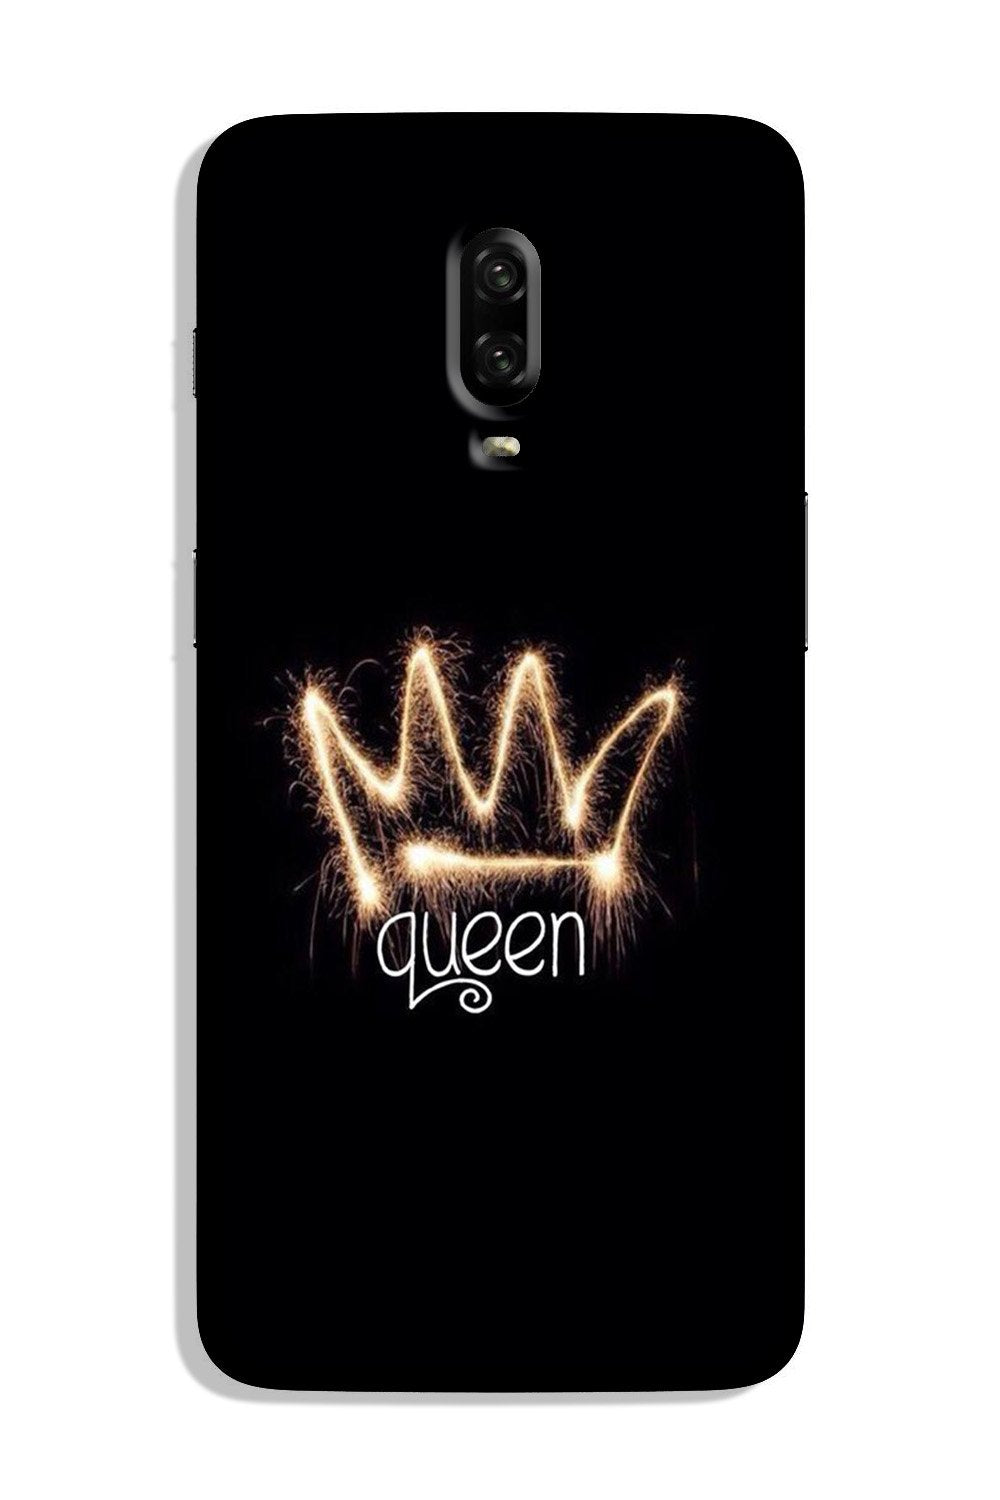 Queen Case for OnePlus 6T (Design No. 270)